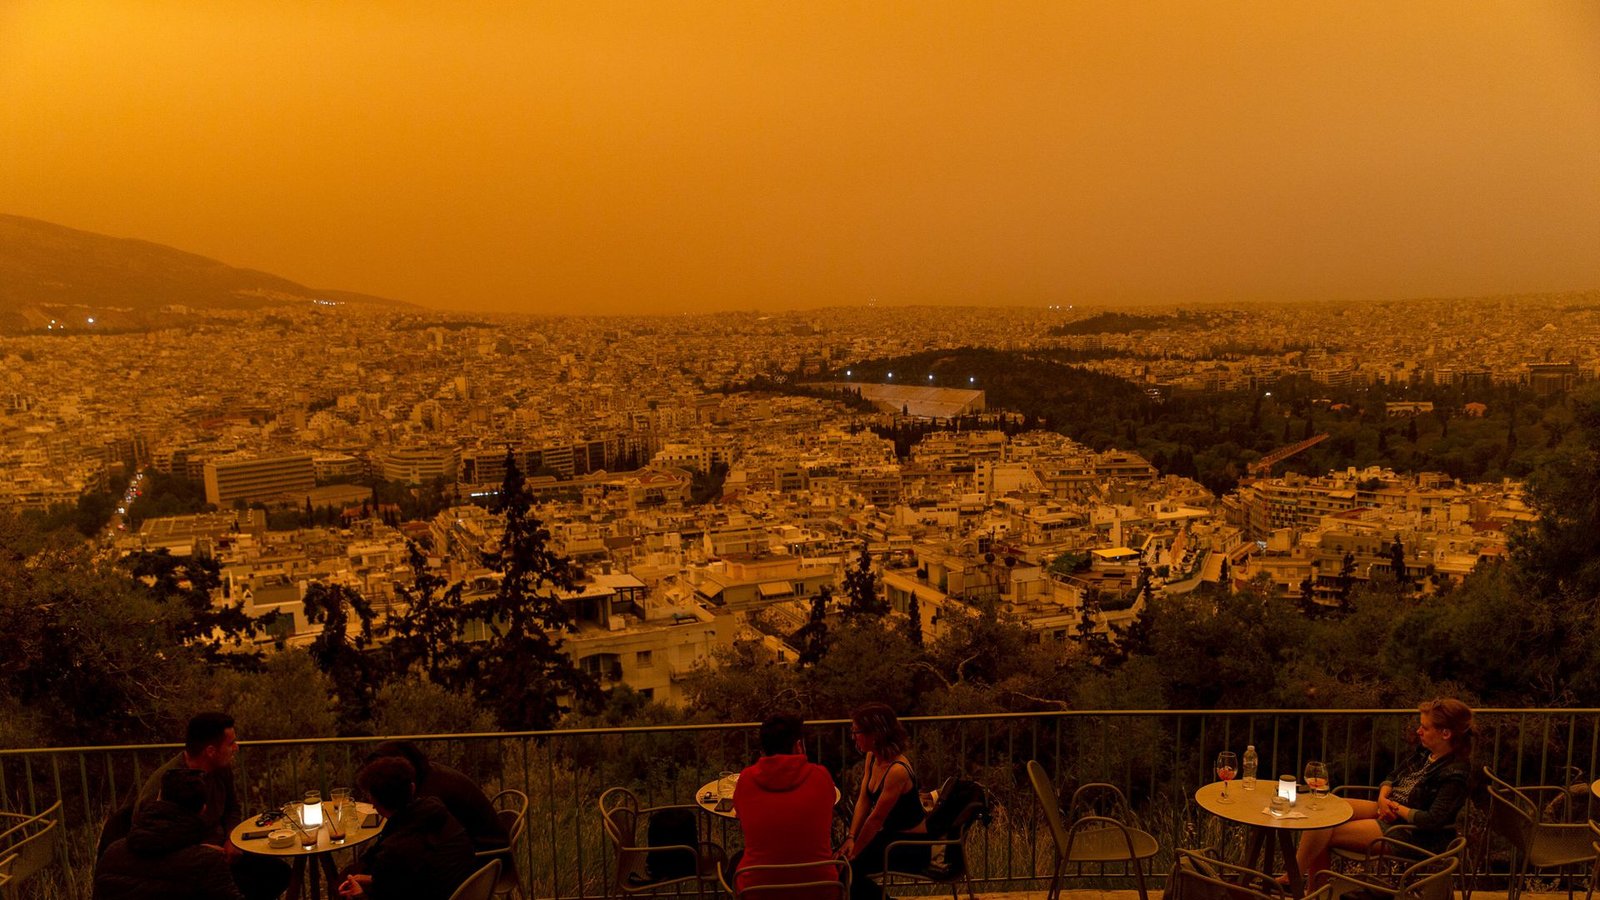 Saharastaub taucht Athen in orangefarbenes Licht.Foto: dpa/Marios Lolos